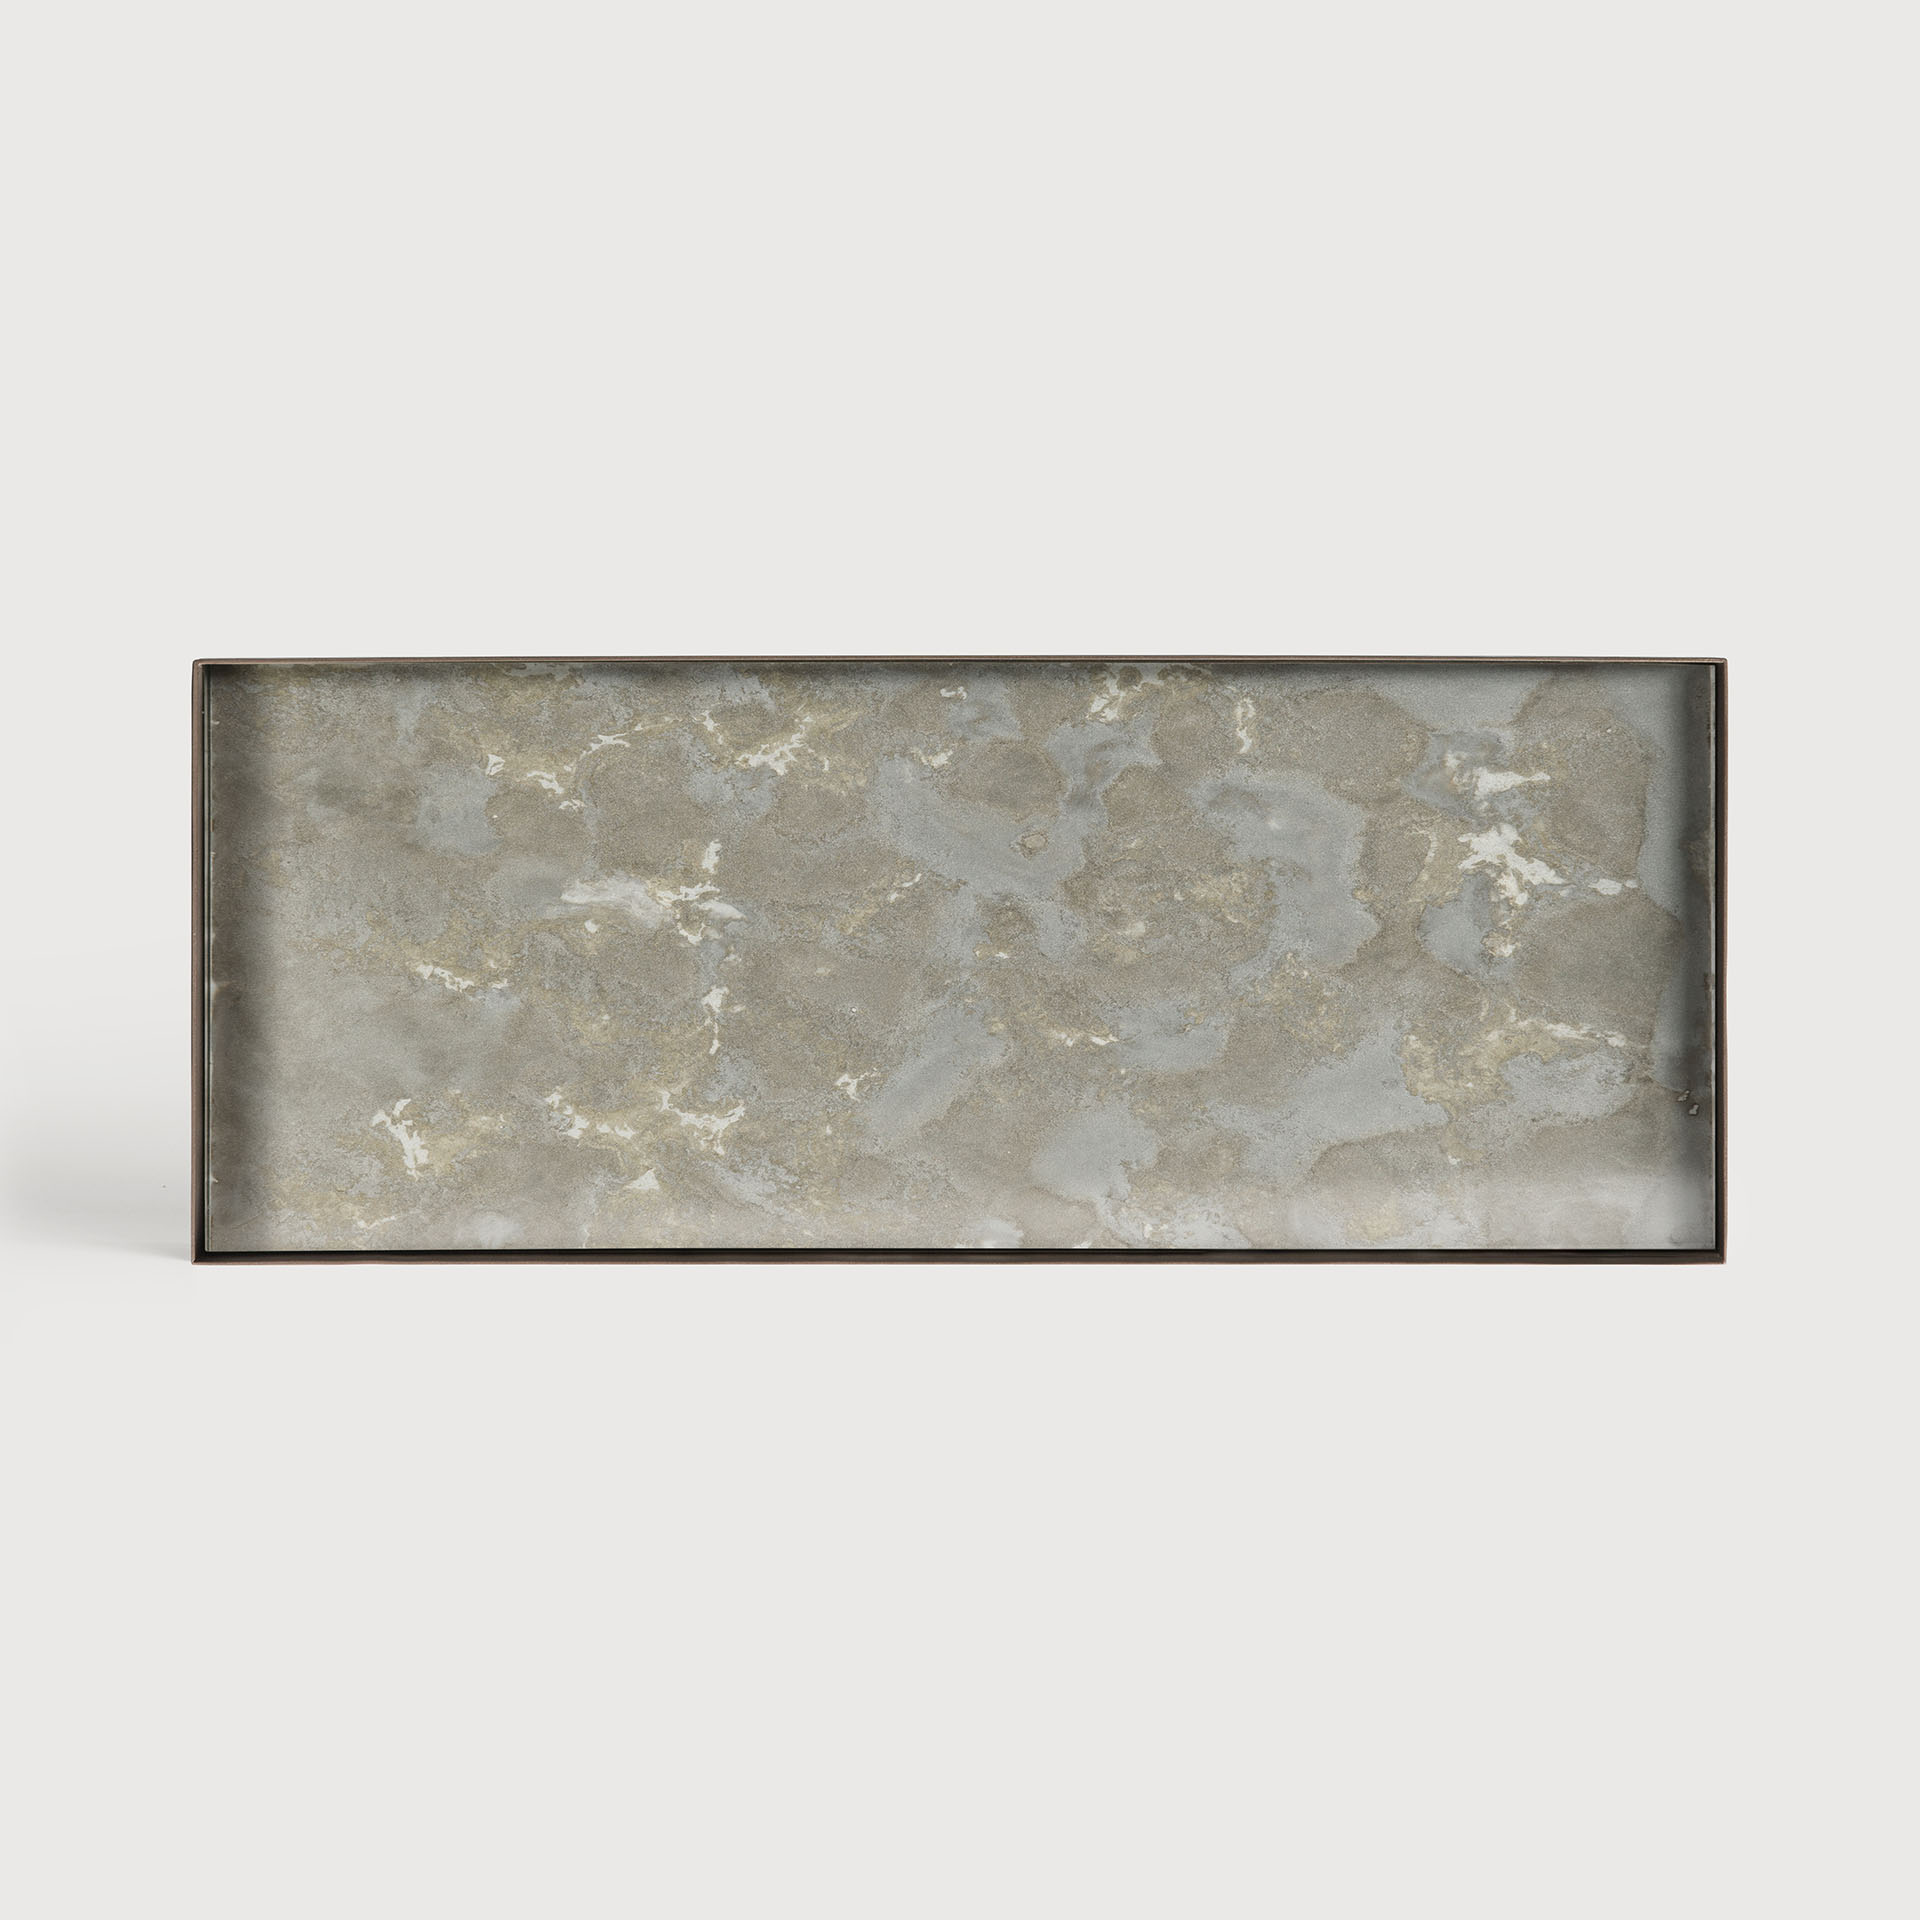 [20385*] Fossil Organic glass valet tray - metal rim  (46x18x3cm)